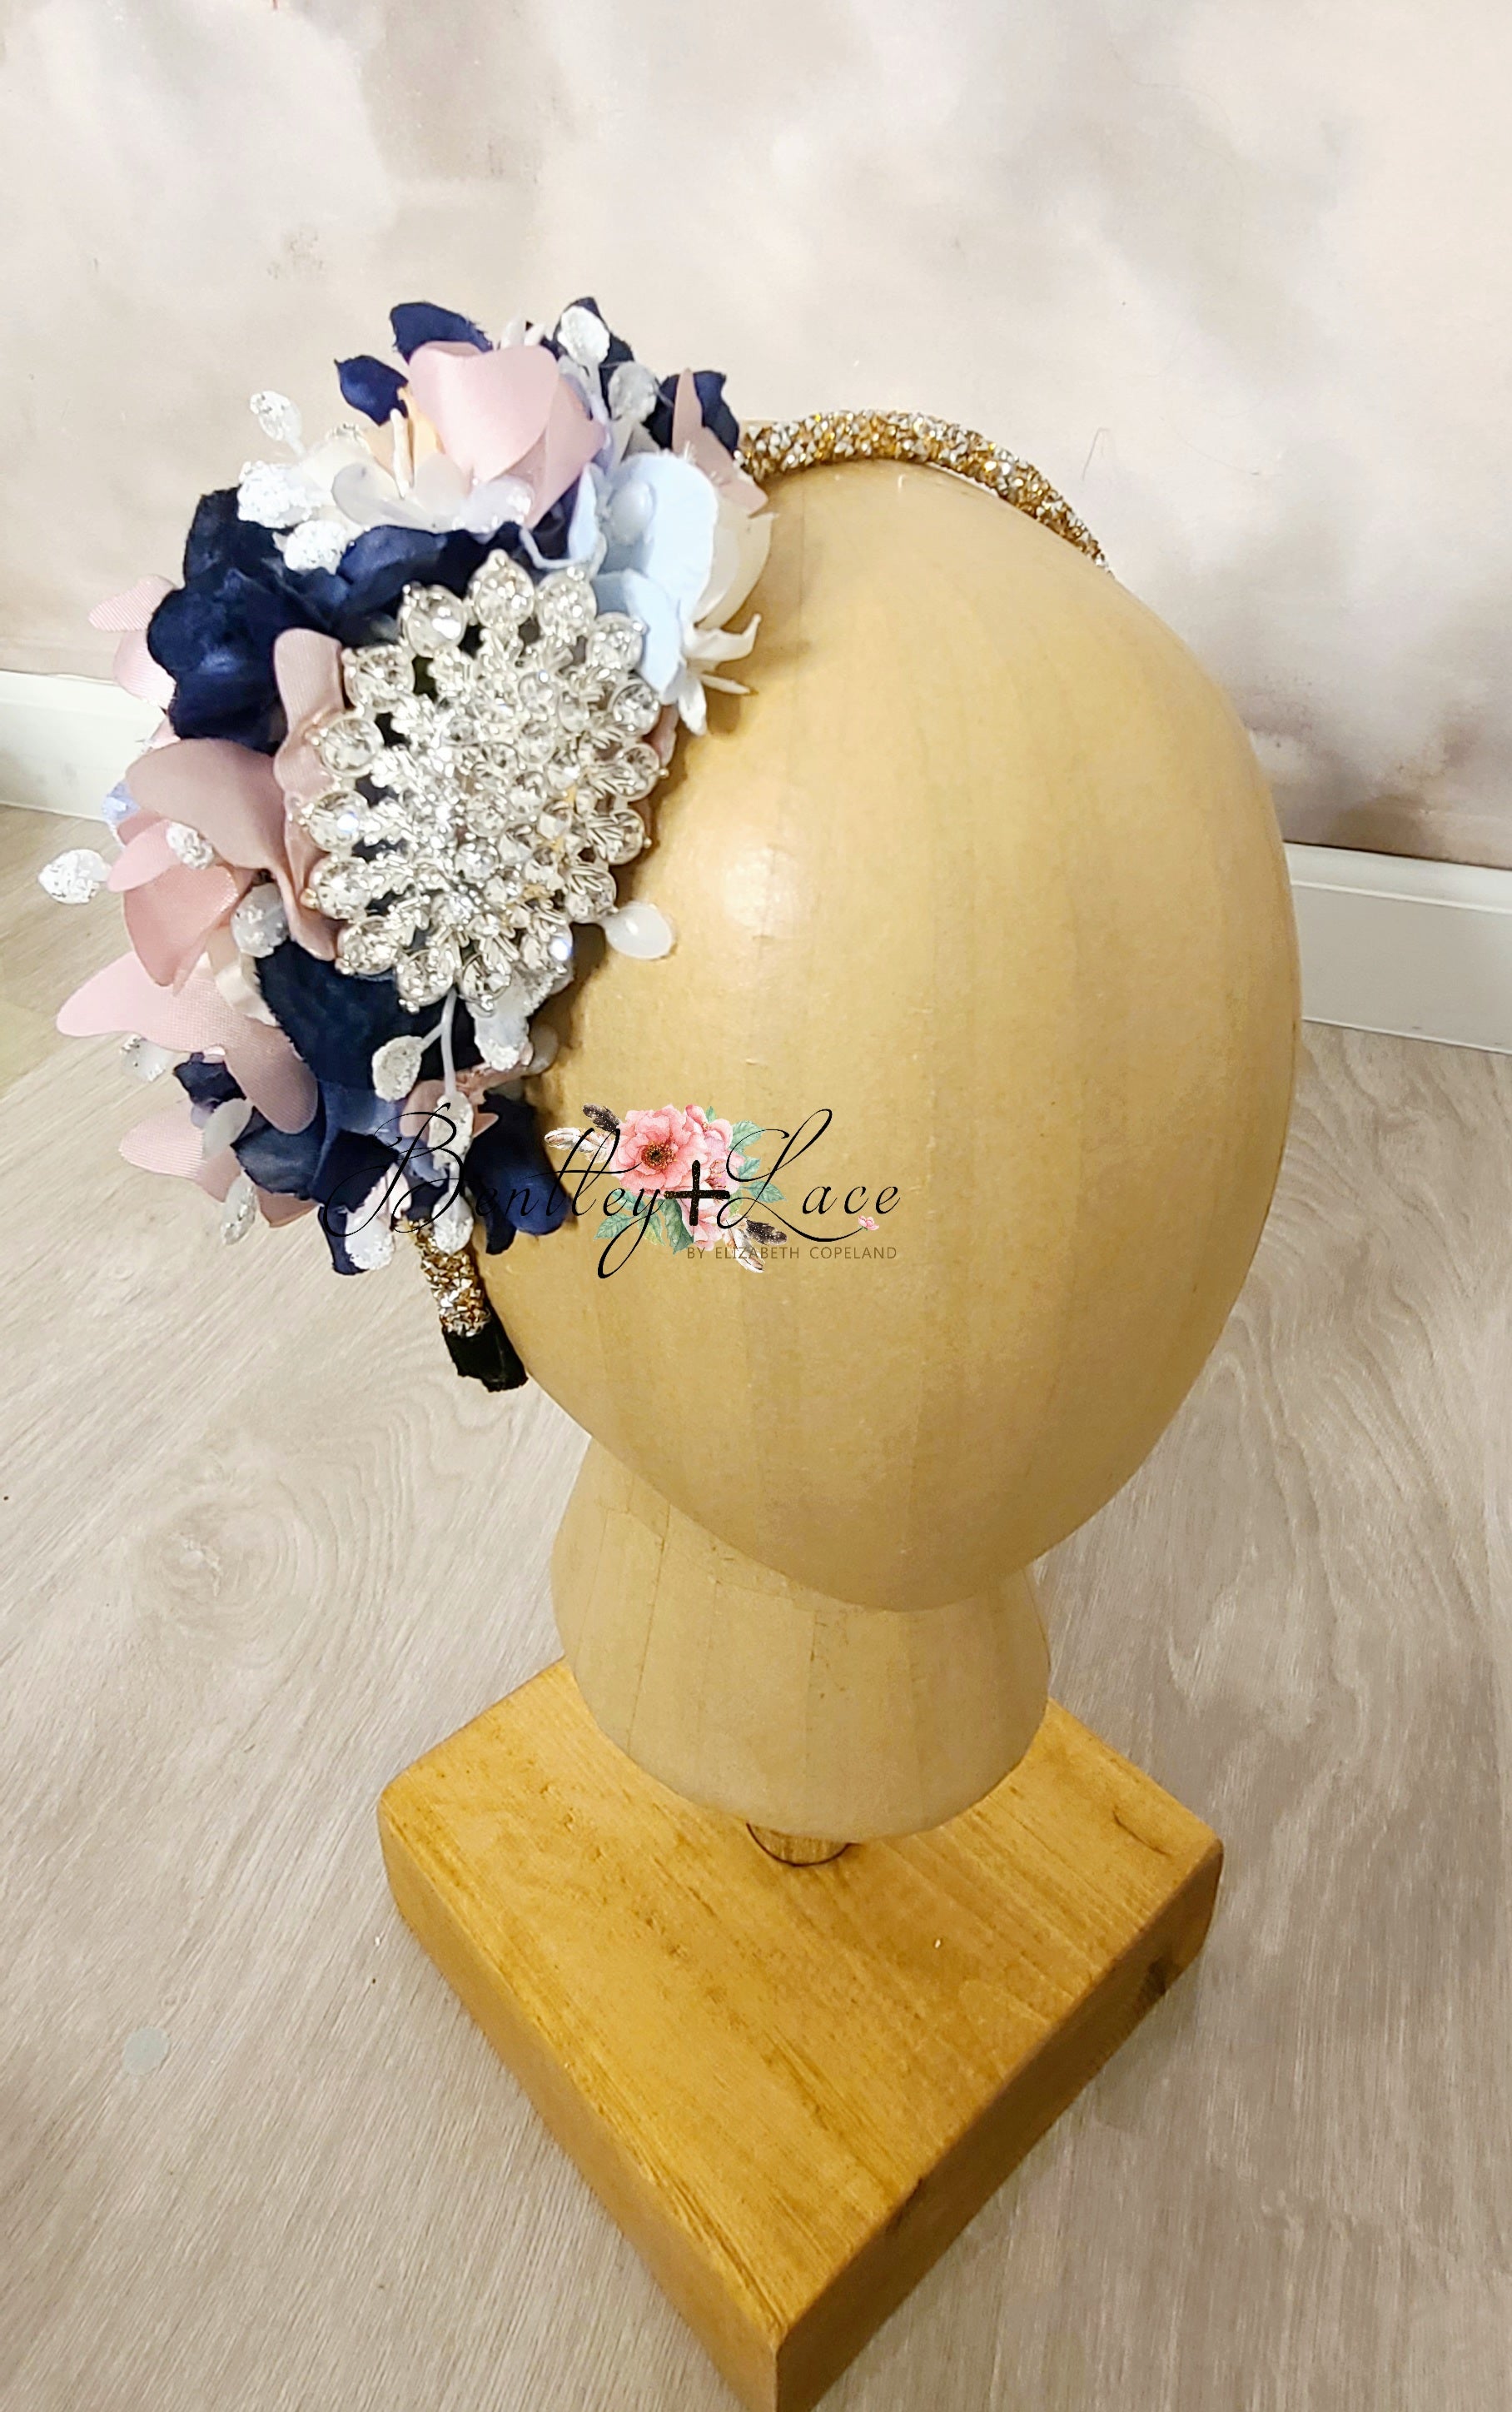 Navy & Pink rhinestone Floral Headband